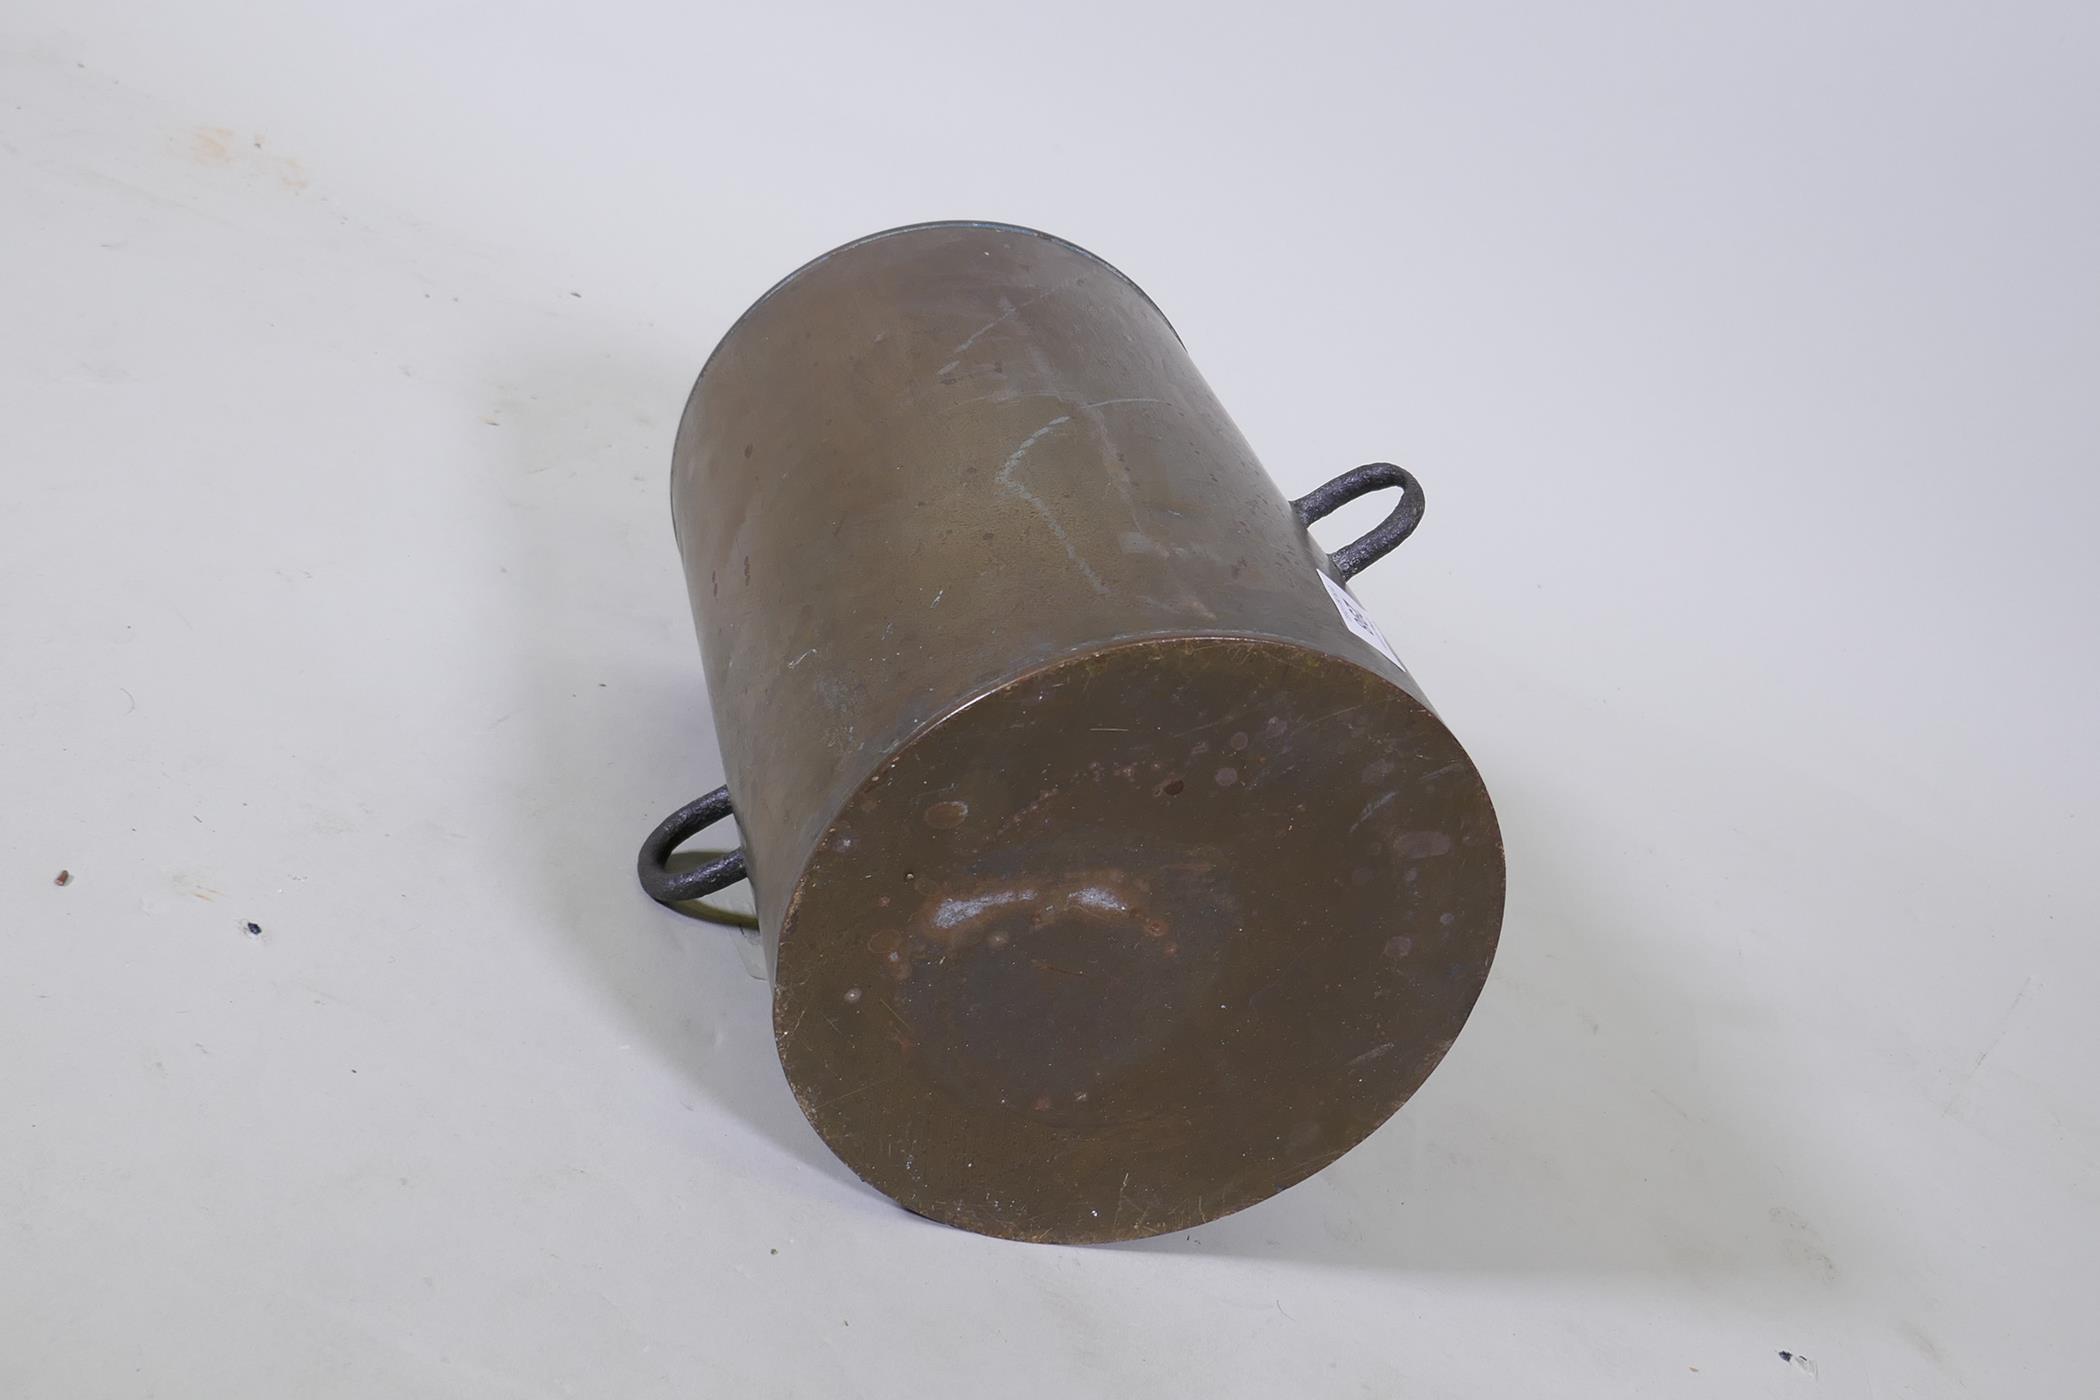 Antique brass buoy, 30 x 20cm - Image 2 of 2